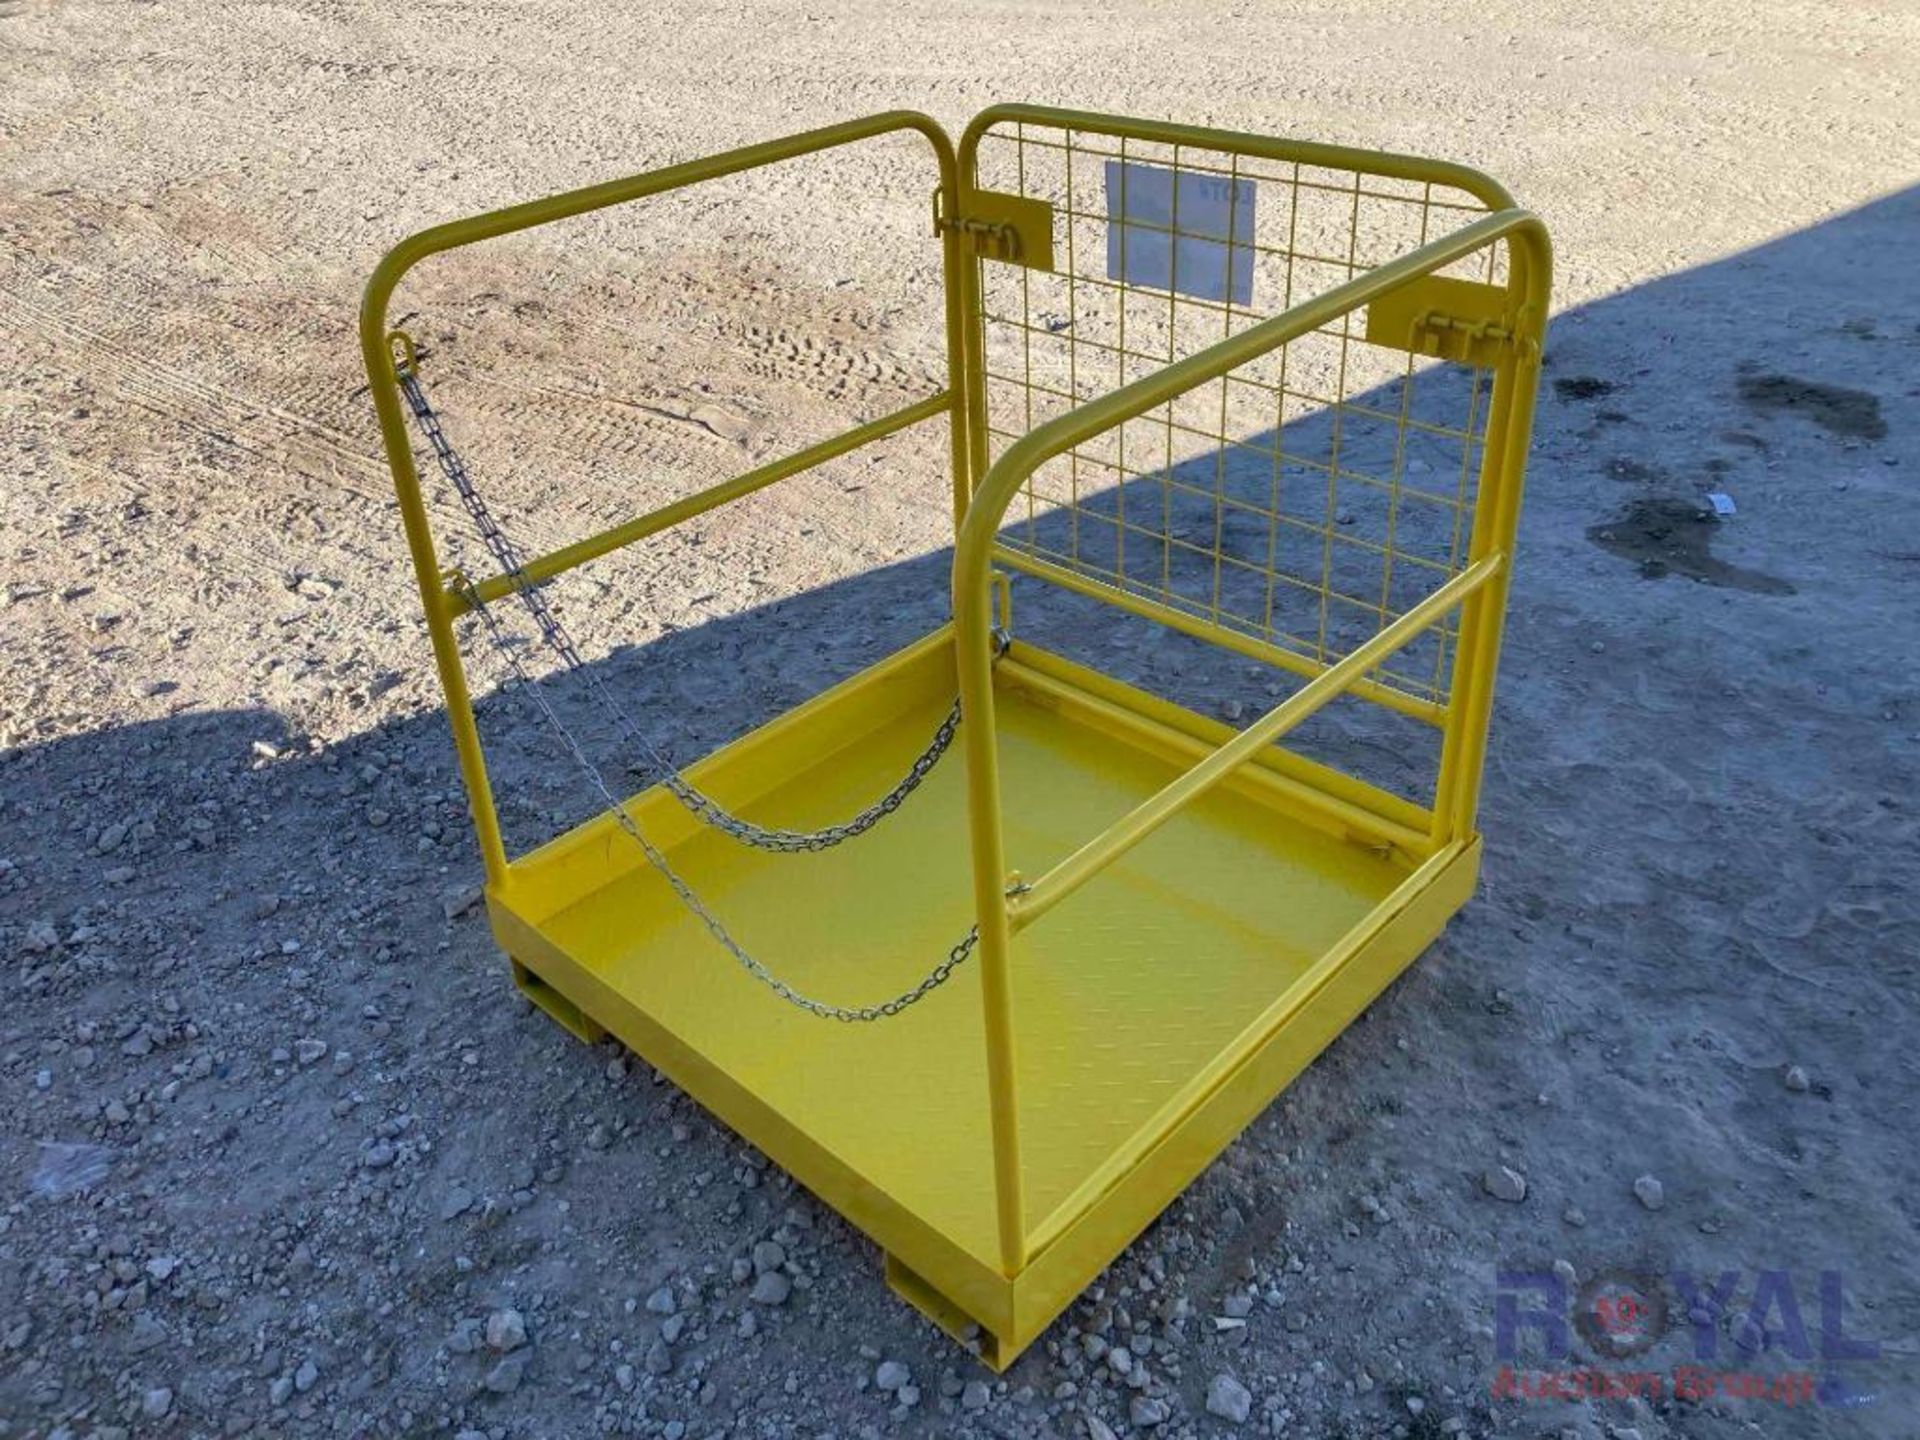 2023 37 in x 37 in Forklift Safety Basket - Image 3 of 8